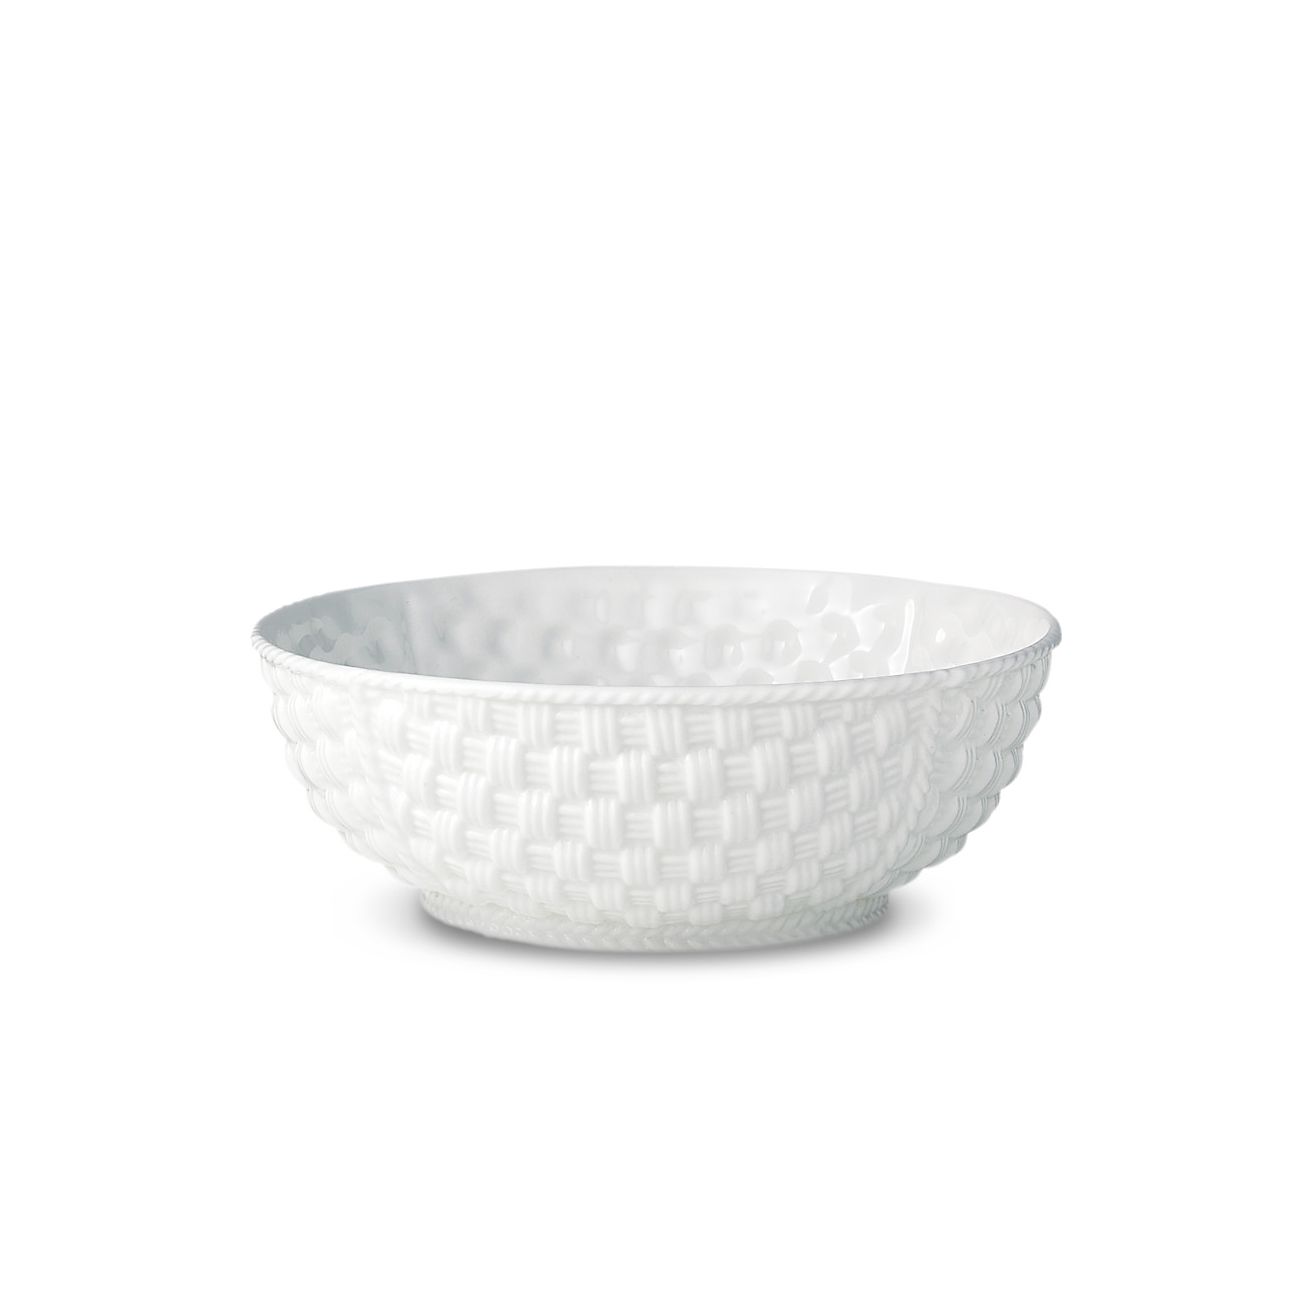 Tiffany Weave bowl in fine English bone 